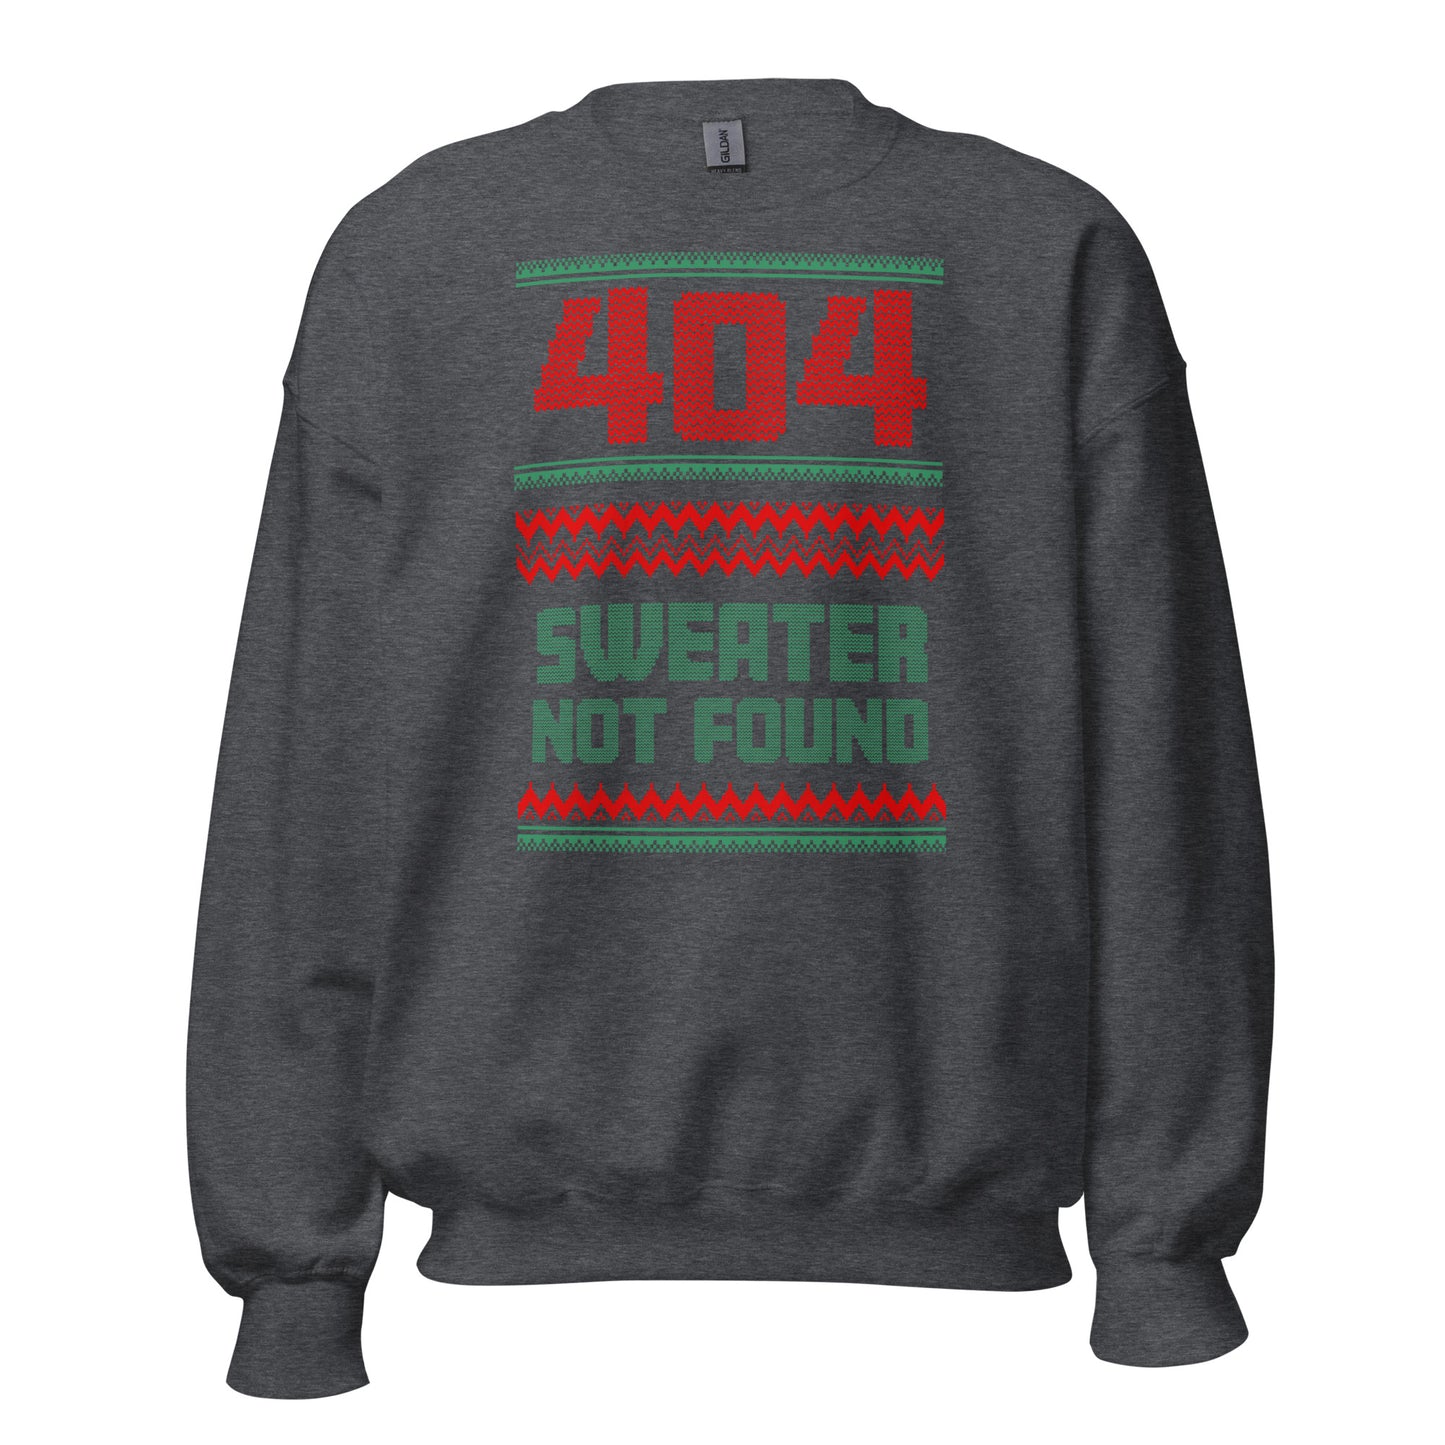 404, Sweater Not Found - Ugly Holiday Sweater - Unisex Sweatshirt